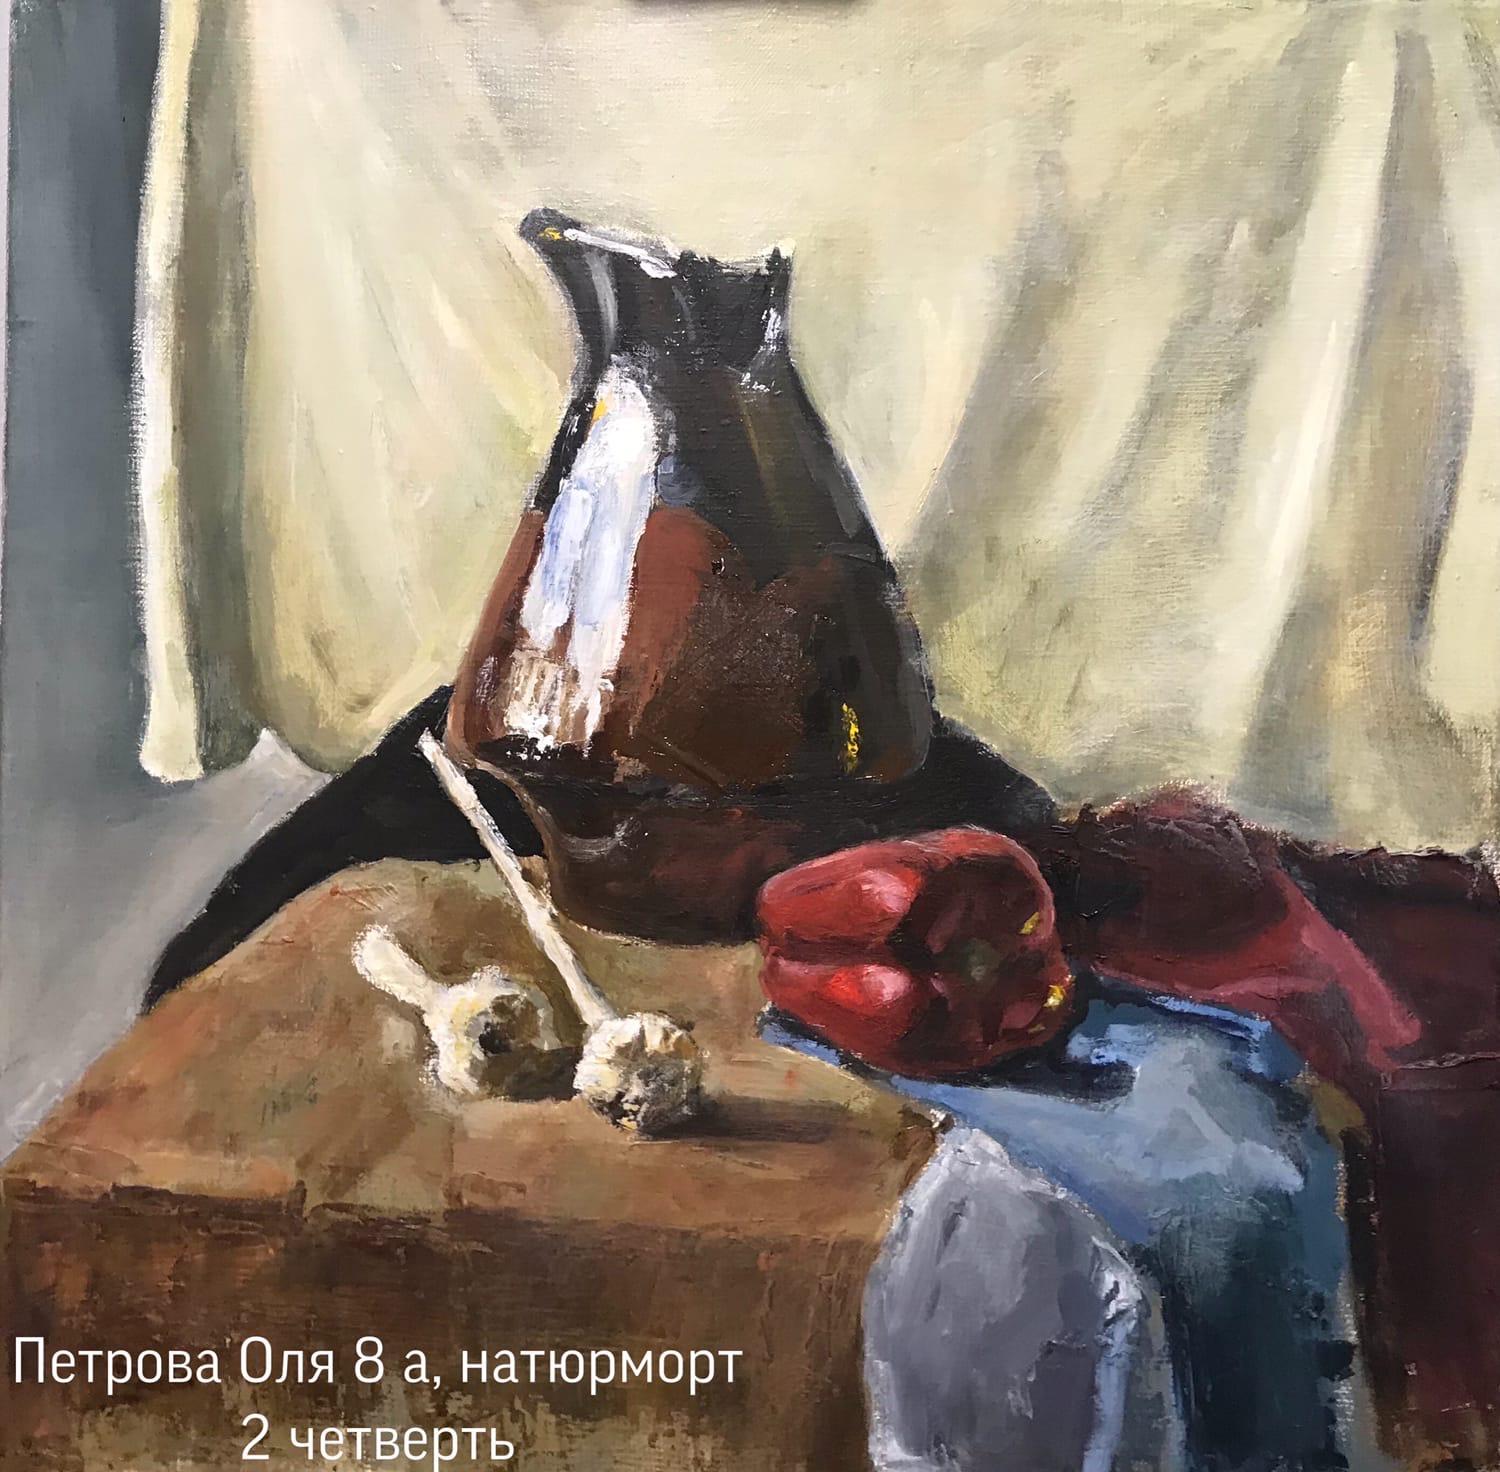 Petrova O. Original modern art painting